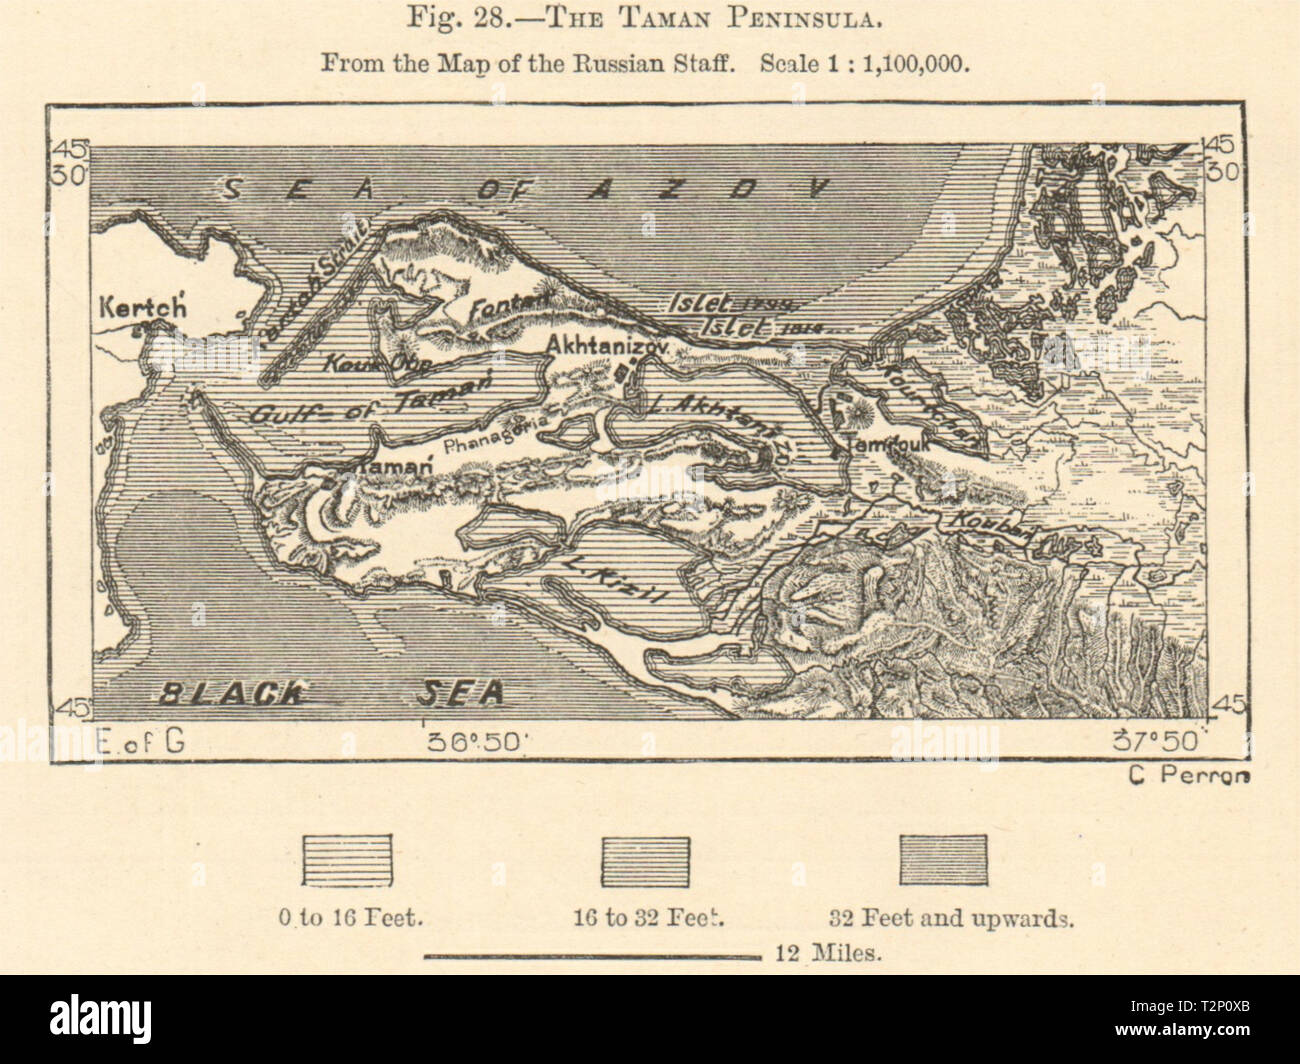 The Taman Peninsula. Sea of Azov. Black Sea. Russia. Sketch map 1885 old Stock Photo